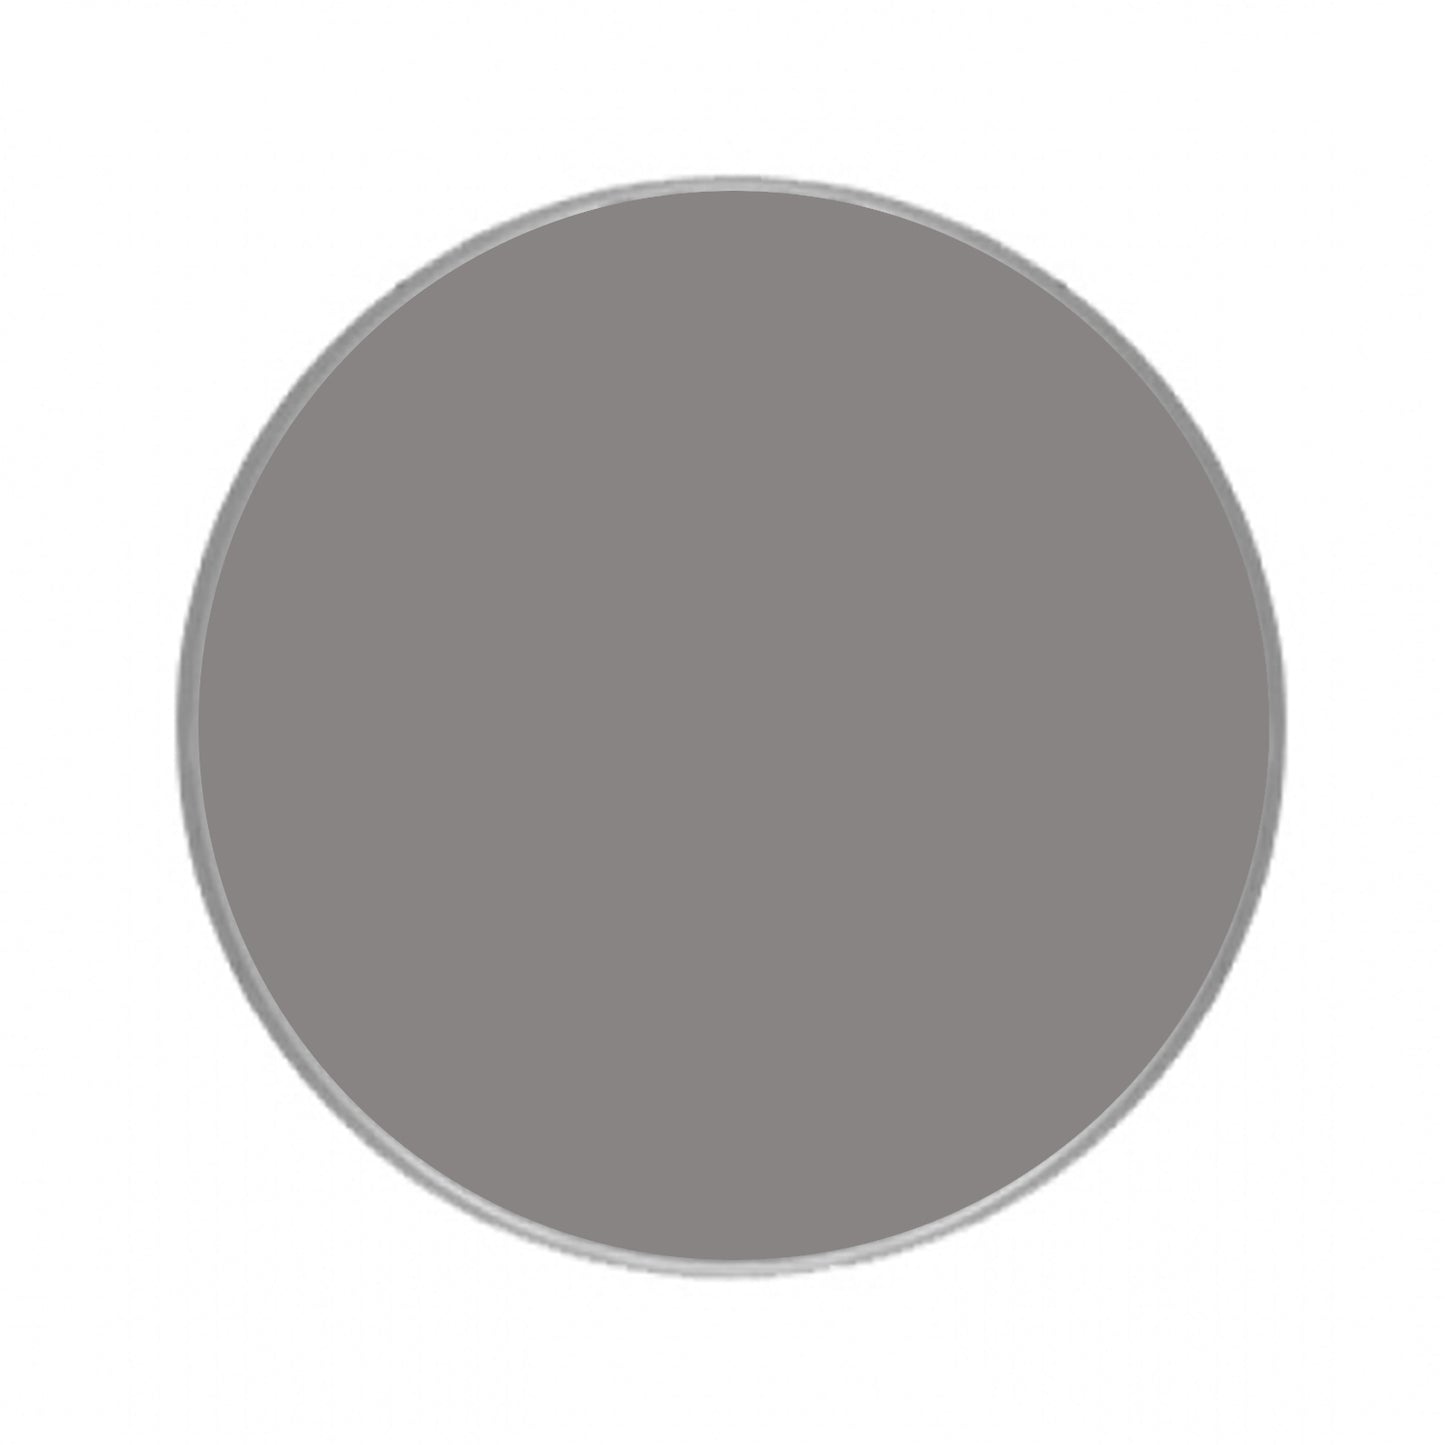 Kryolan Aquacolor Gray Face Paint Refills 32B (4 ml)